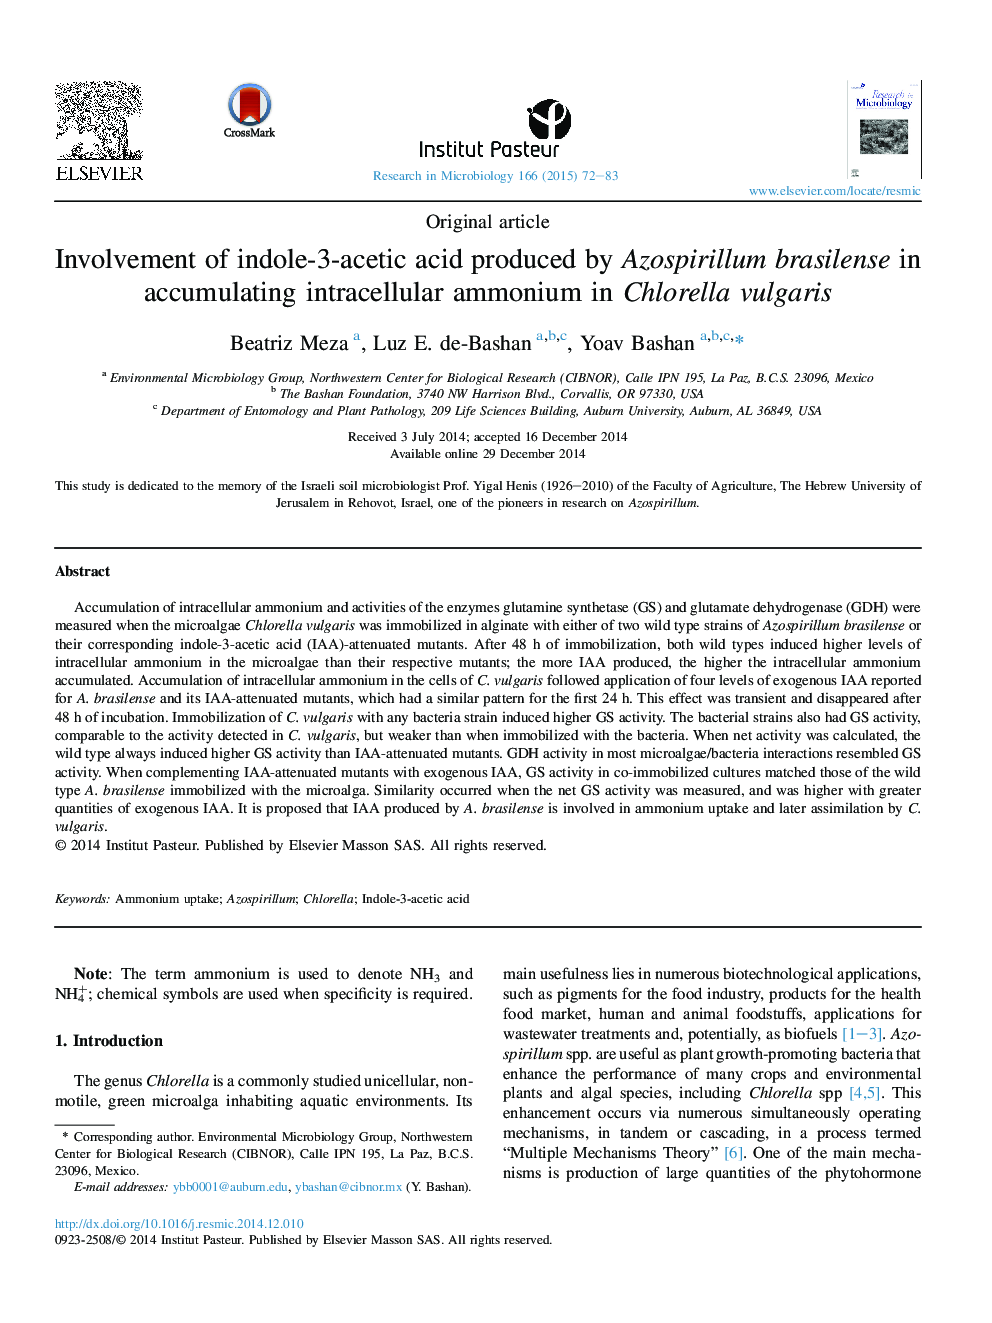 Involvement of indole-3-acetic acid produced by Azospirillum brasilense in accumulating intracellular ammonium in Chlorella vulgaris